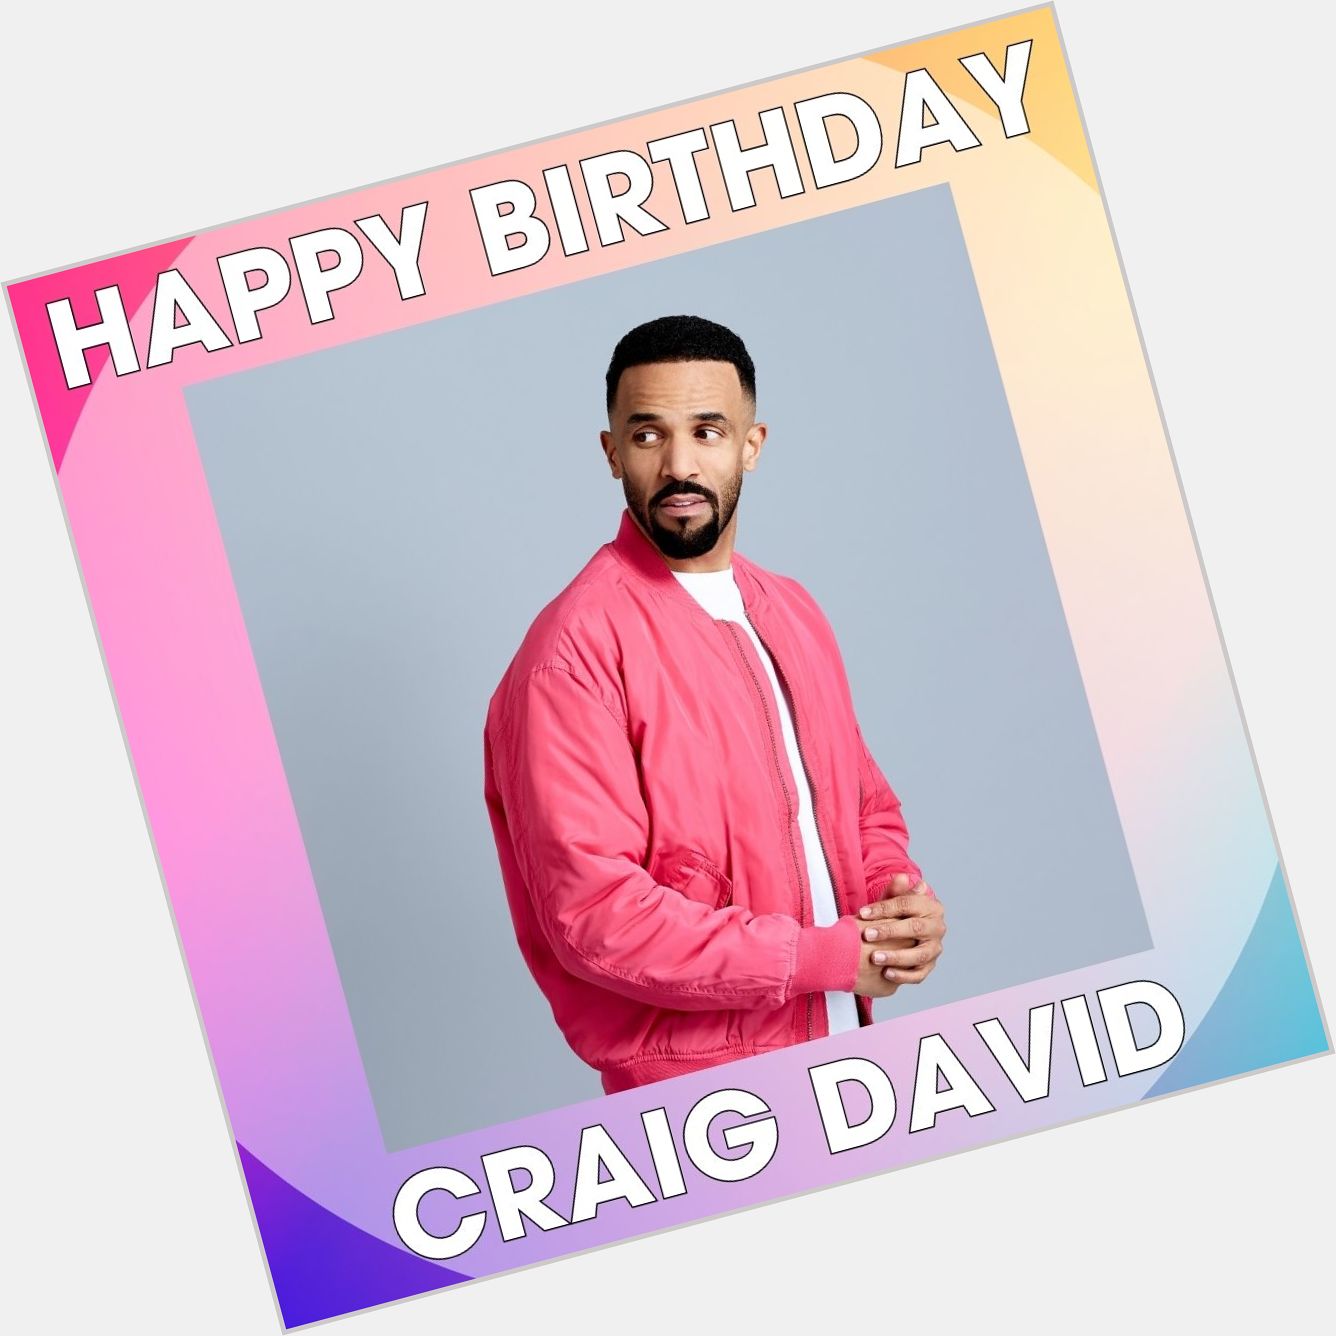 Happy 42nd Birthday to Craig David!! 